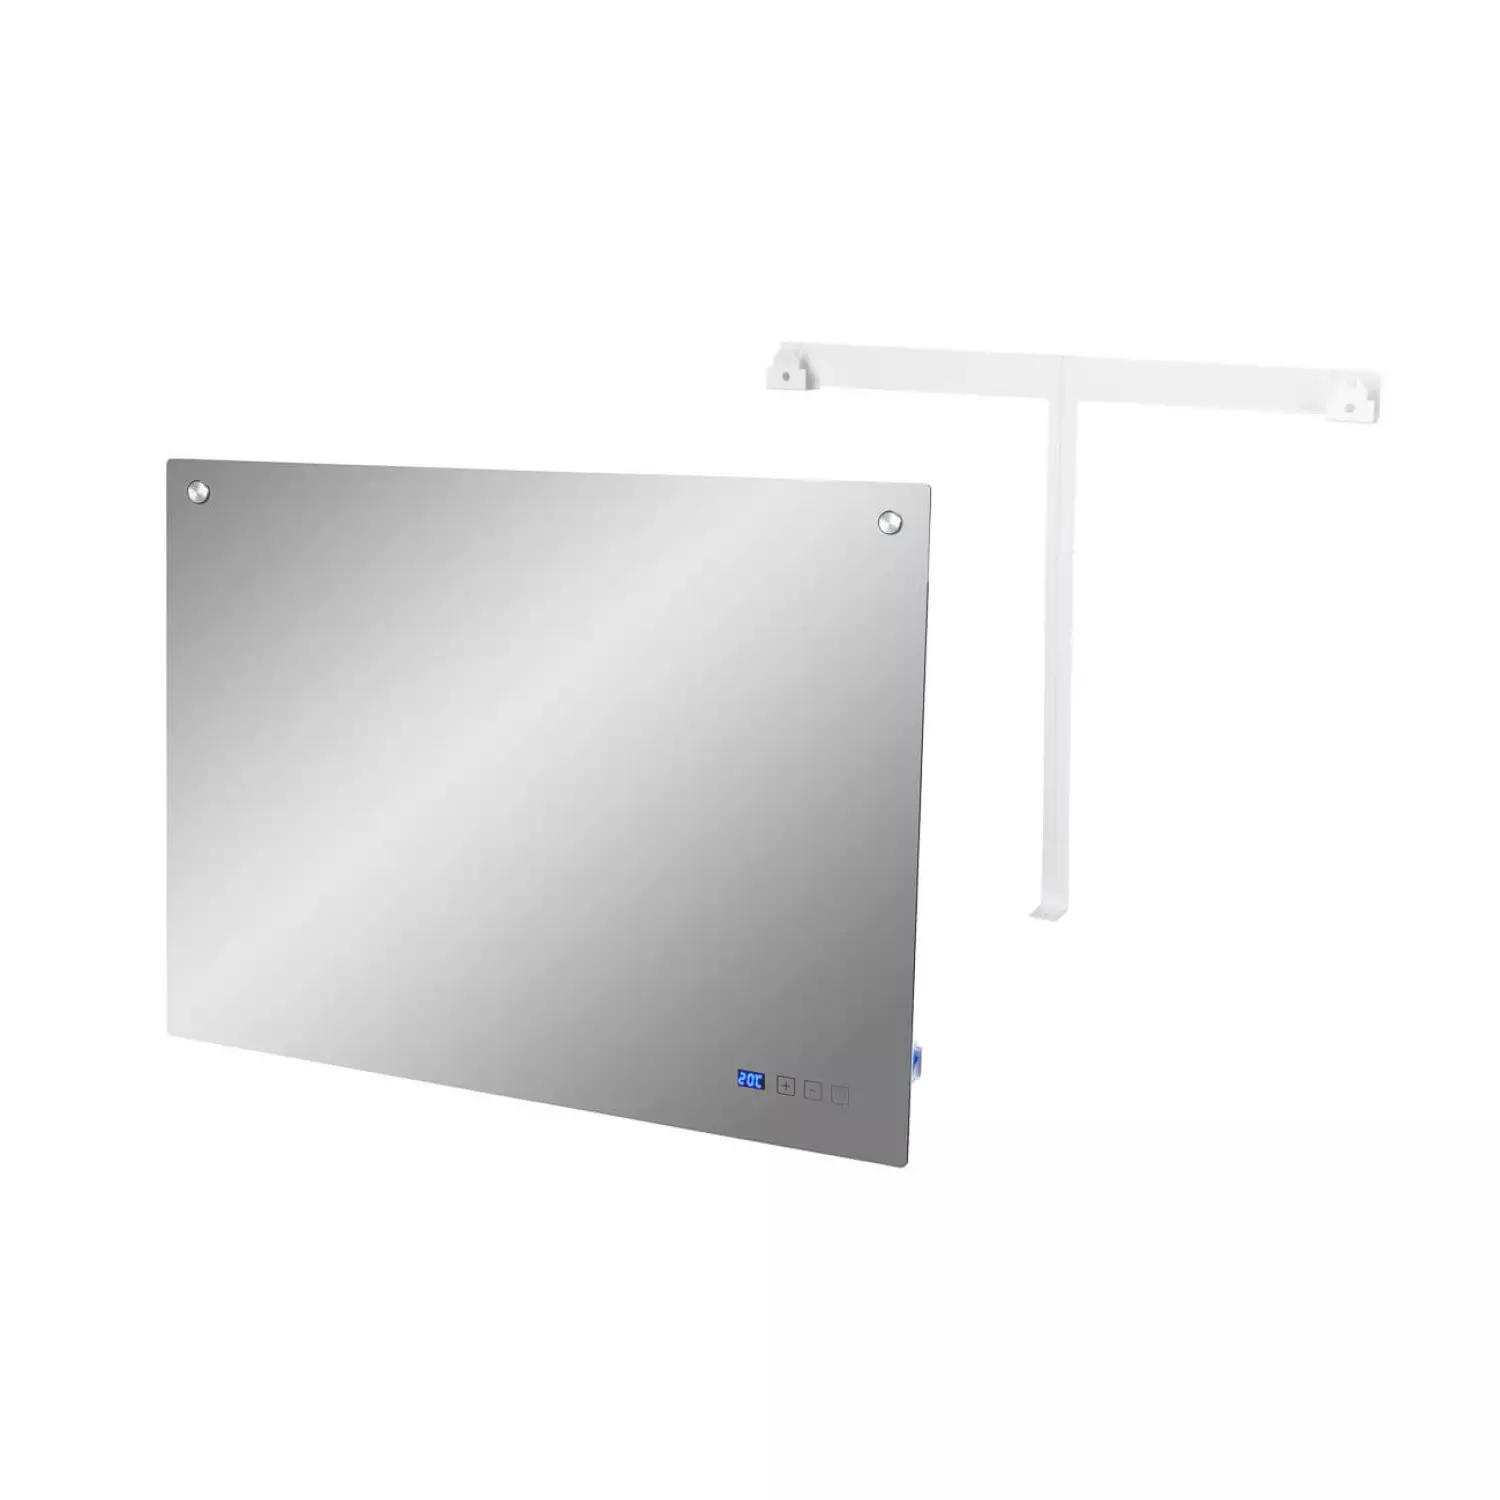 Eurom Sani 600 Mirror WiFi Infrarood paneel - 600W - 11,2 kg-image